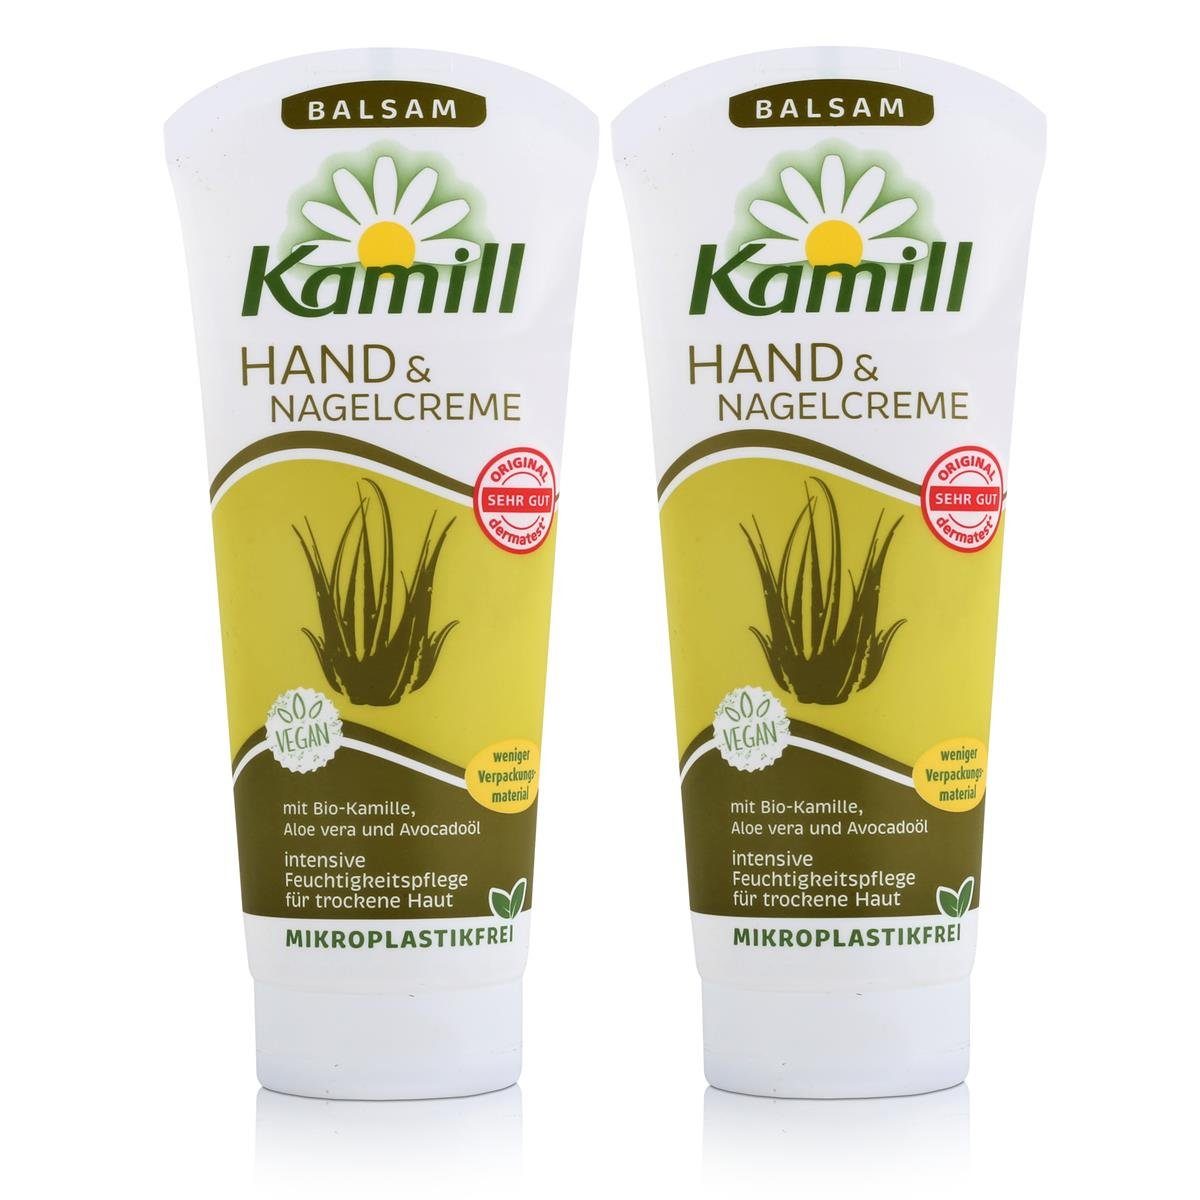 Kamill Hautcreme Kamill Hand & Nagelcreme Balsam 100ml - Handcreme Kamillenextrakt (2er